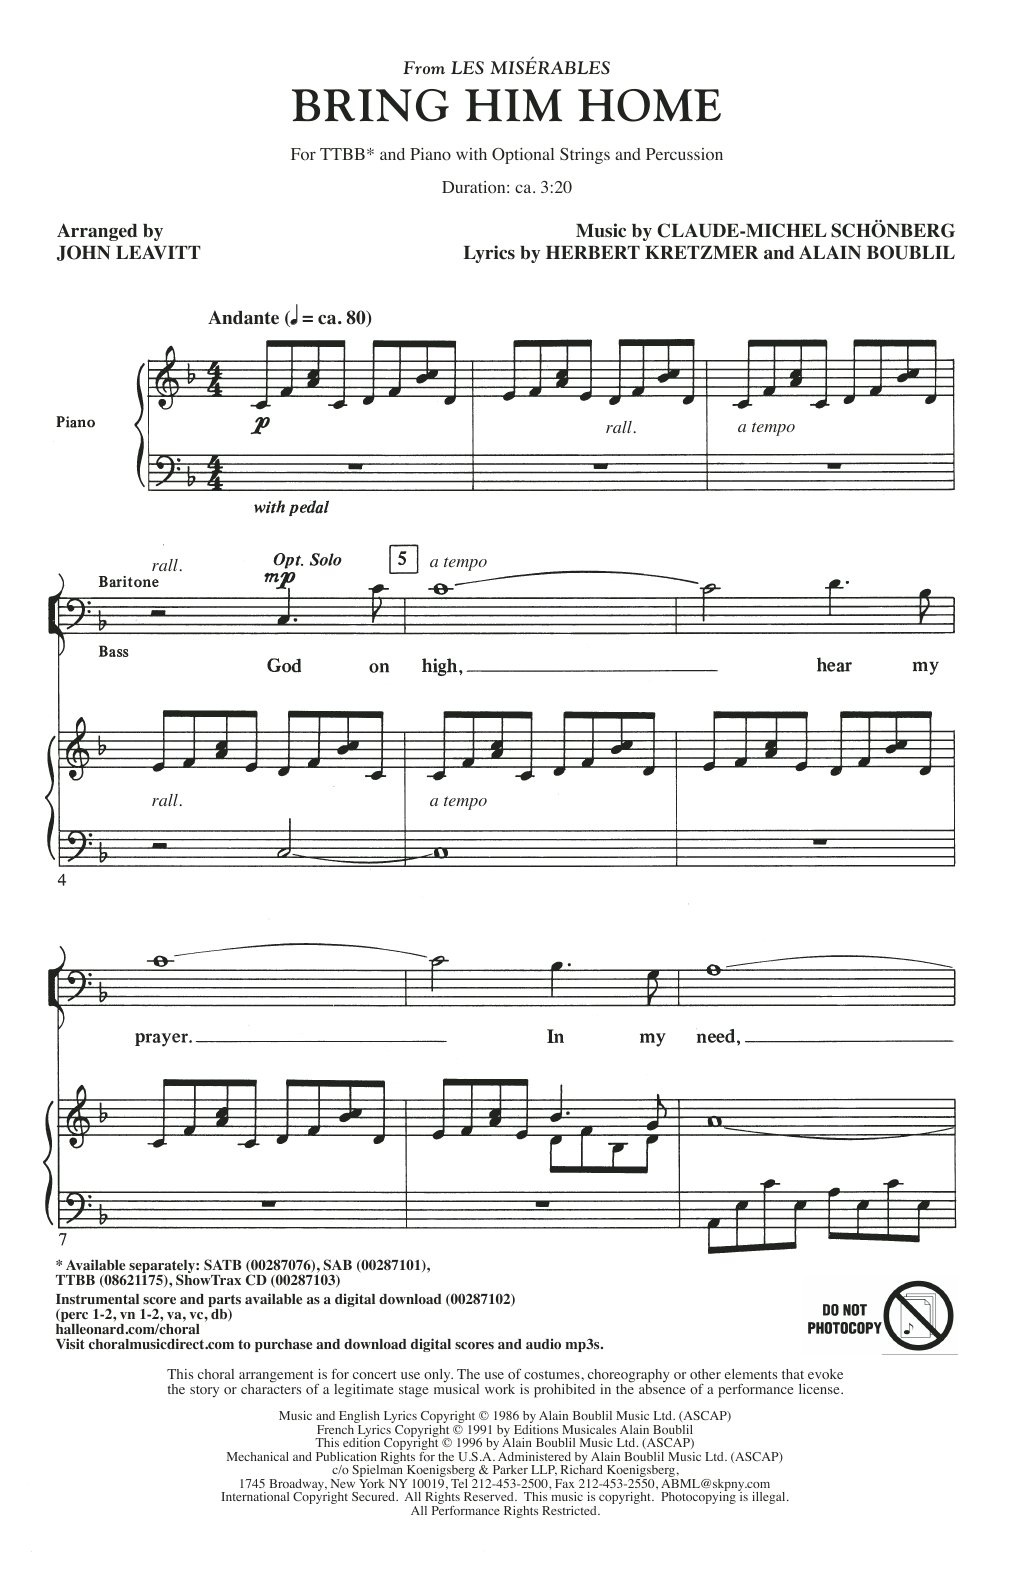 Boublil & Schonberg Bring Him Home (from Les Miserables) (arr. John Leavitt) Sheet Music Notes & Chords for SATB Choir - Download or Print PDF